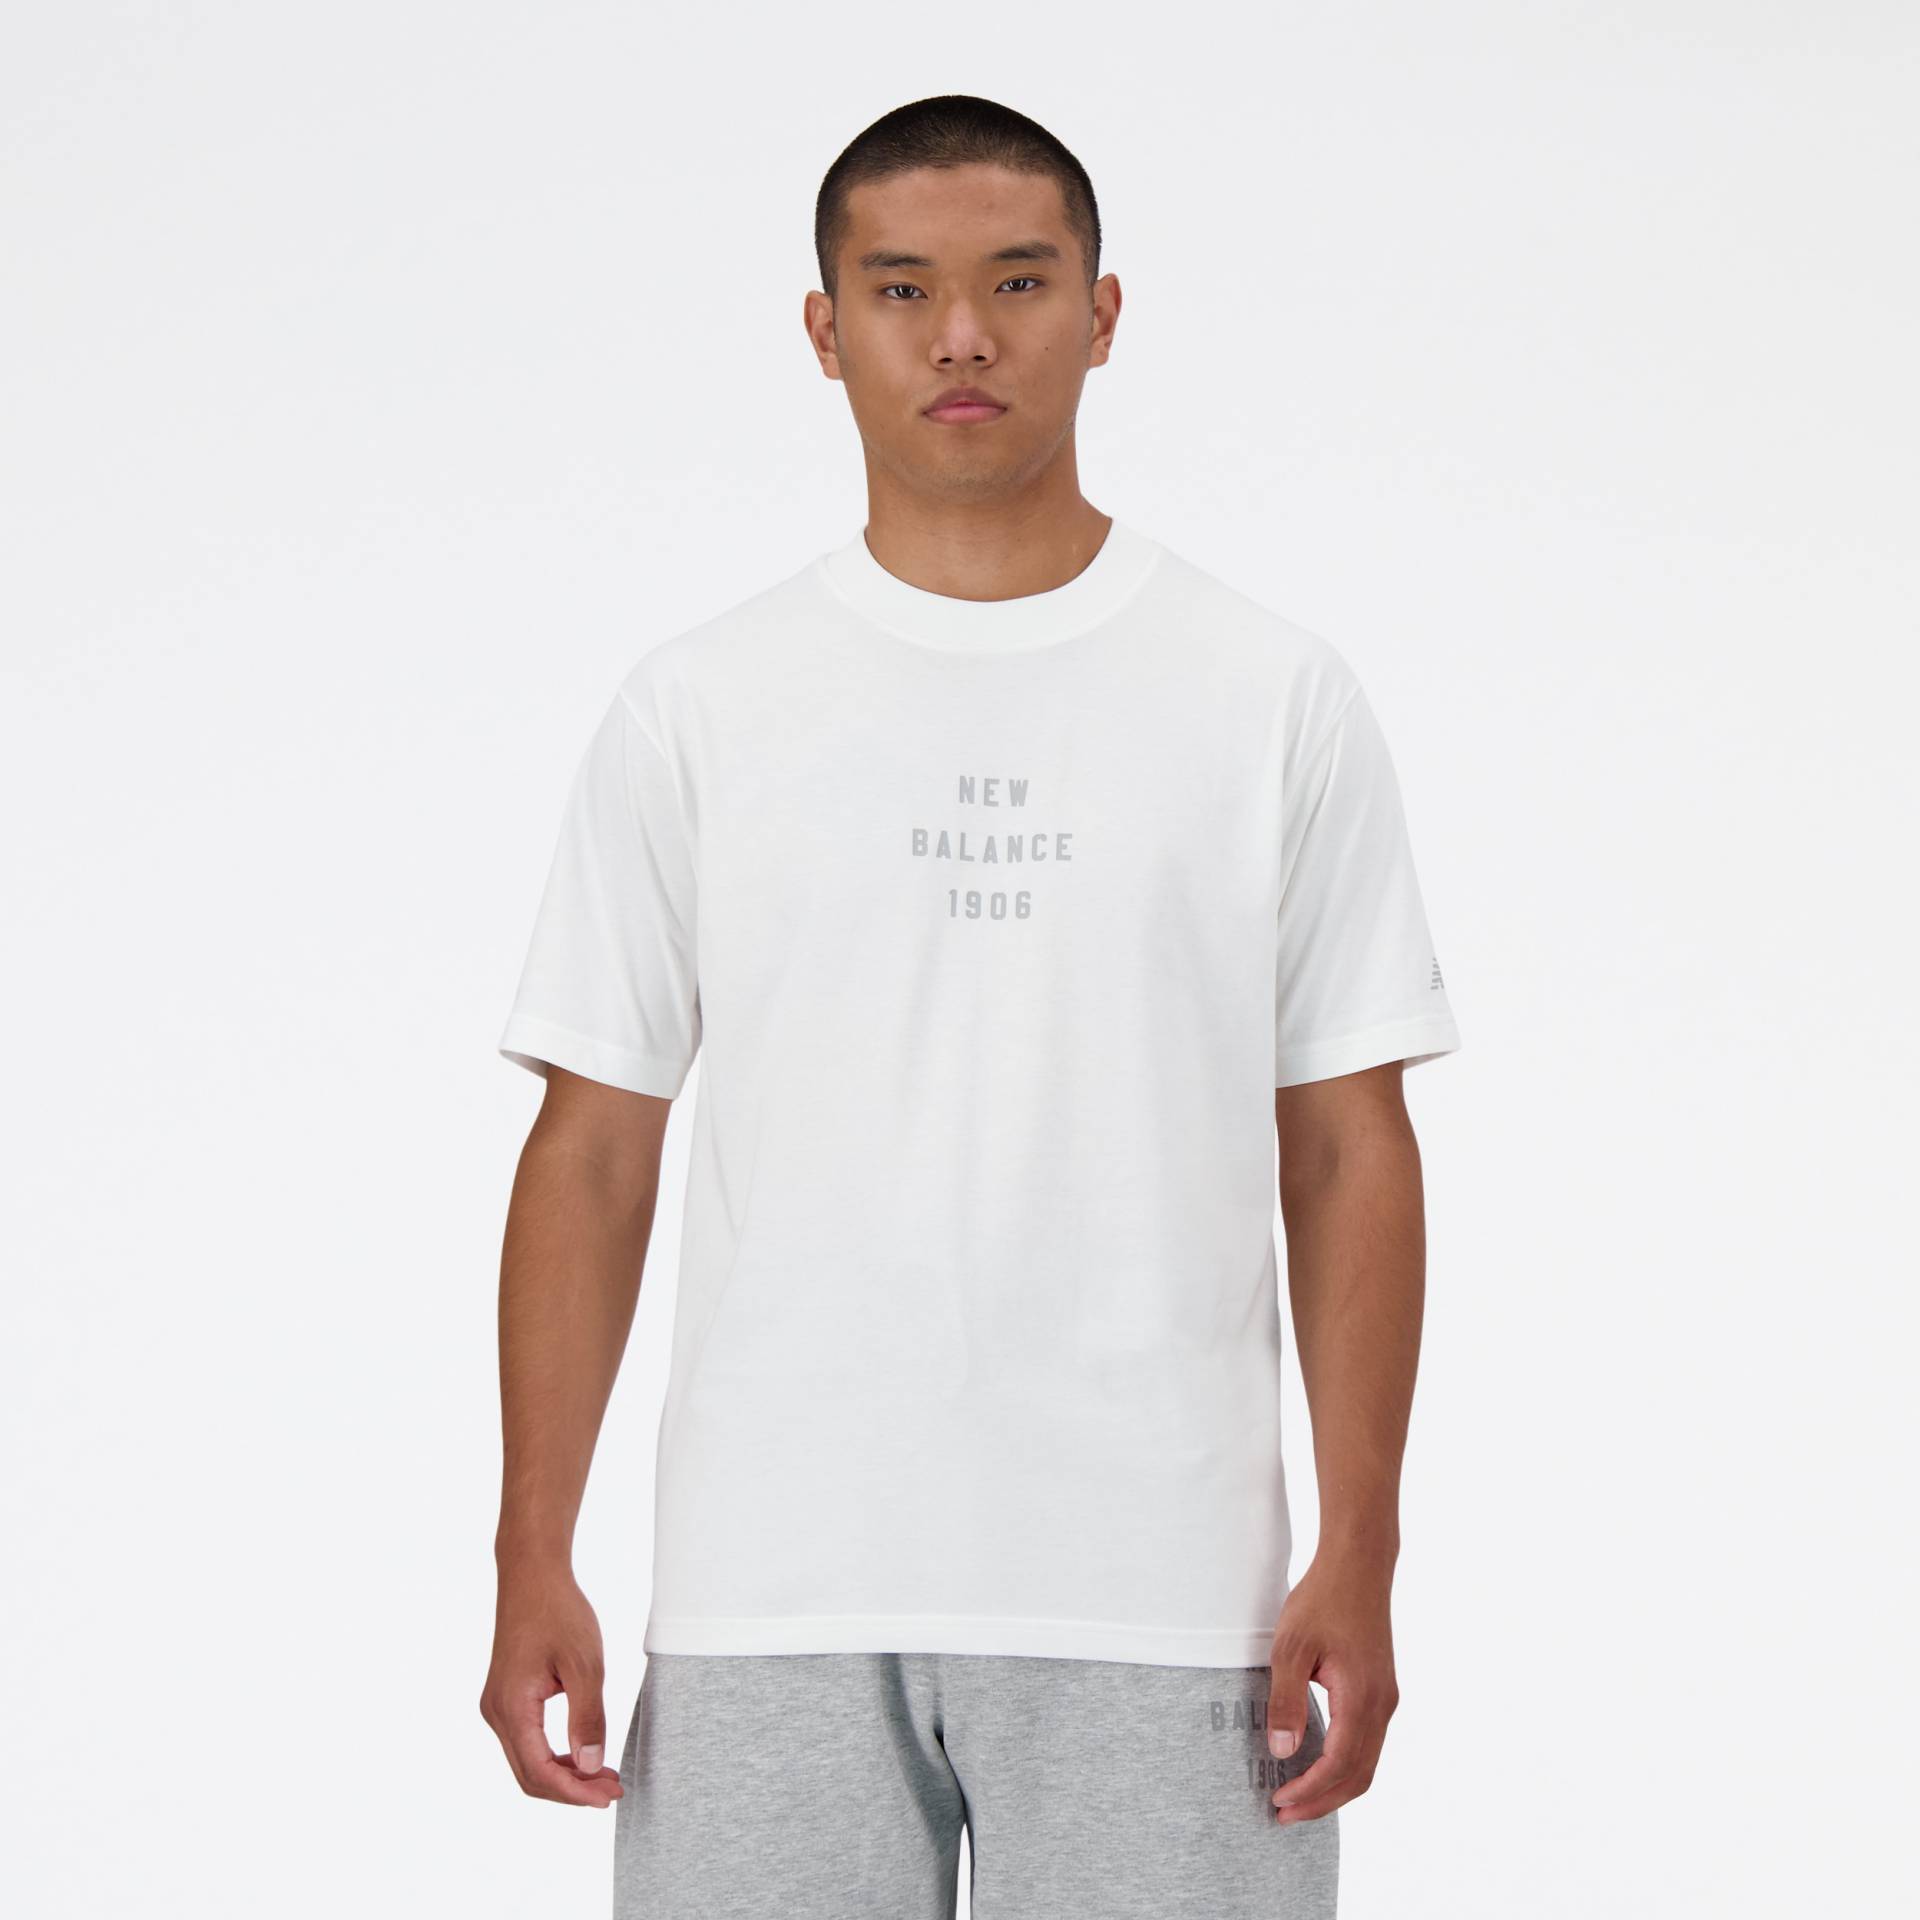 New Balance T-Shirt »MENS LIFESTYLE T-SHIRT« von New Balance